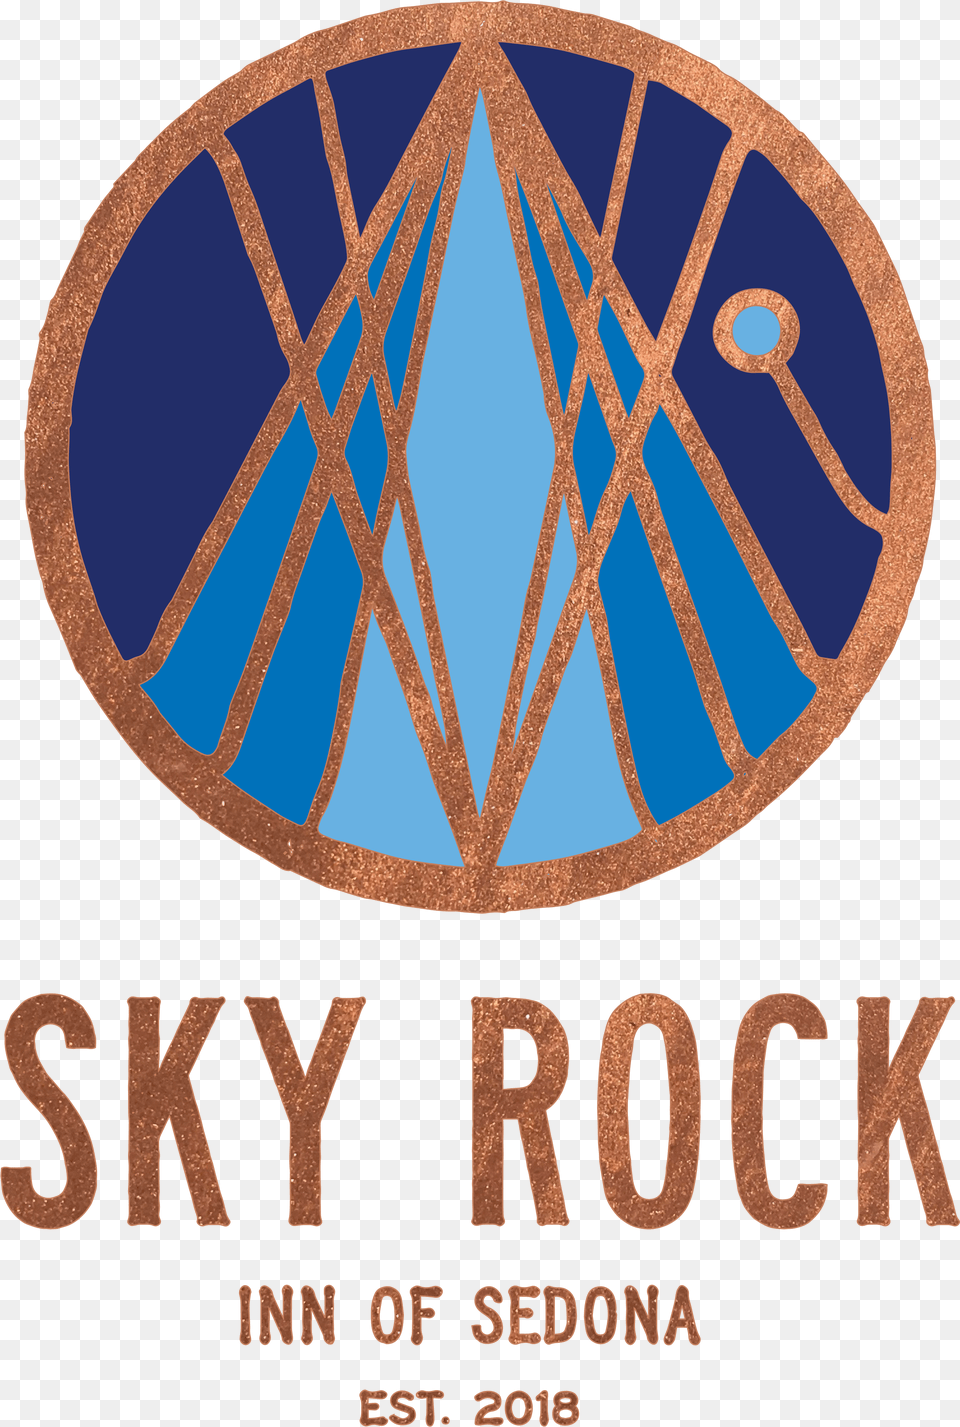 Sky Rock Inn Of Sedona Png Image